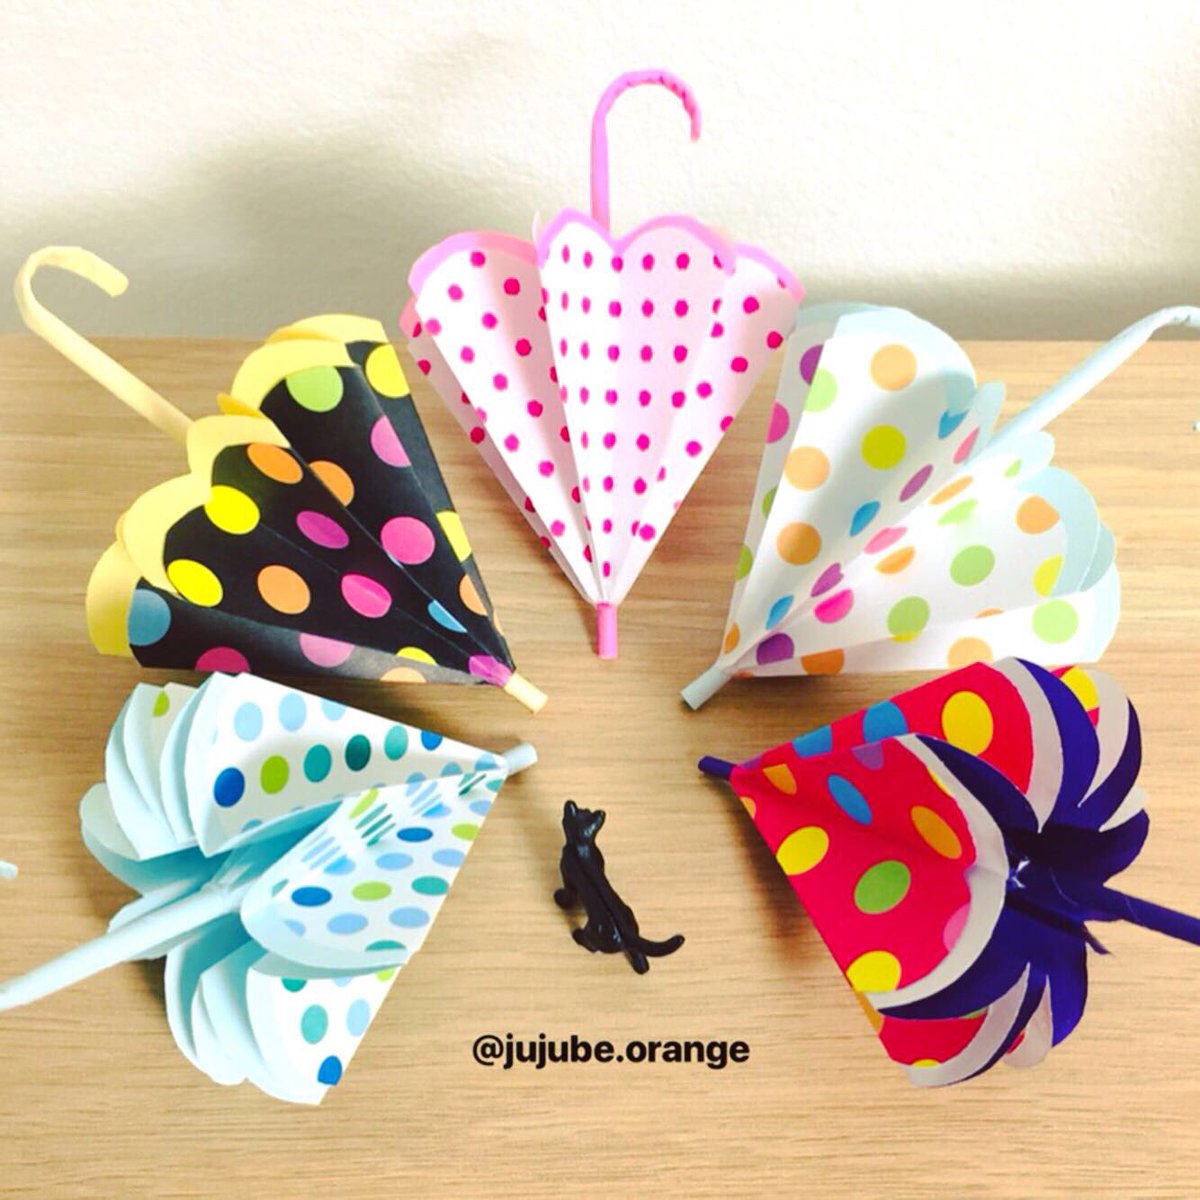 Jujube Orange Twitterissa 折り紙の傘 作り方はyoutube 番傘を簡略化した折り方です 開閉可能 おりがみ 折り紙 Origami かさ